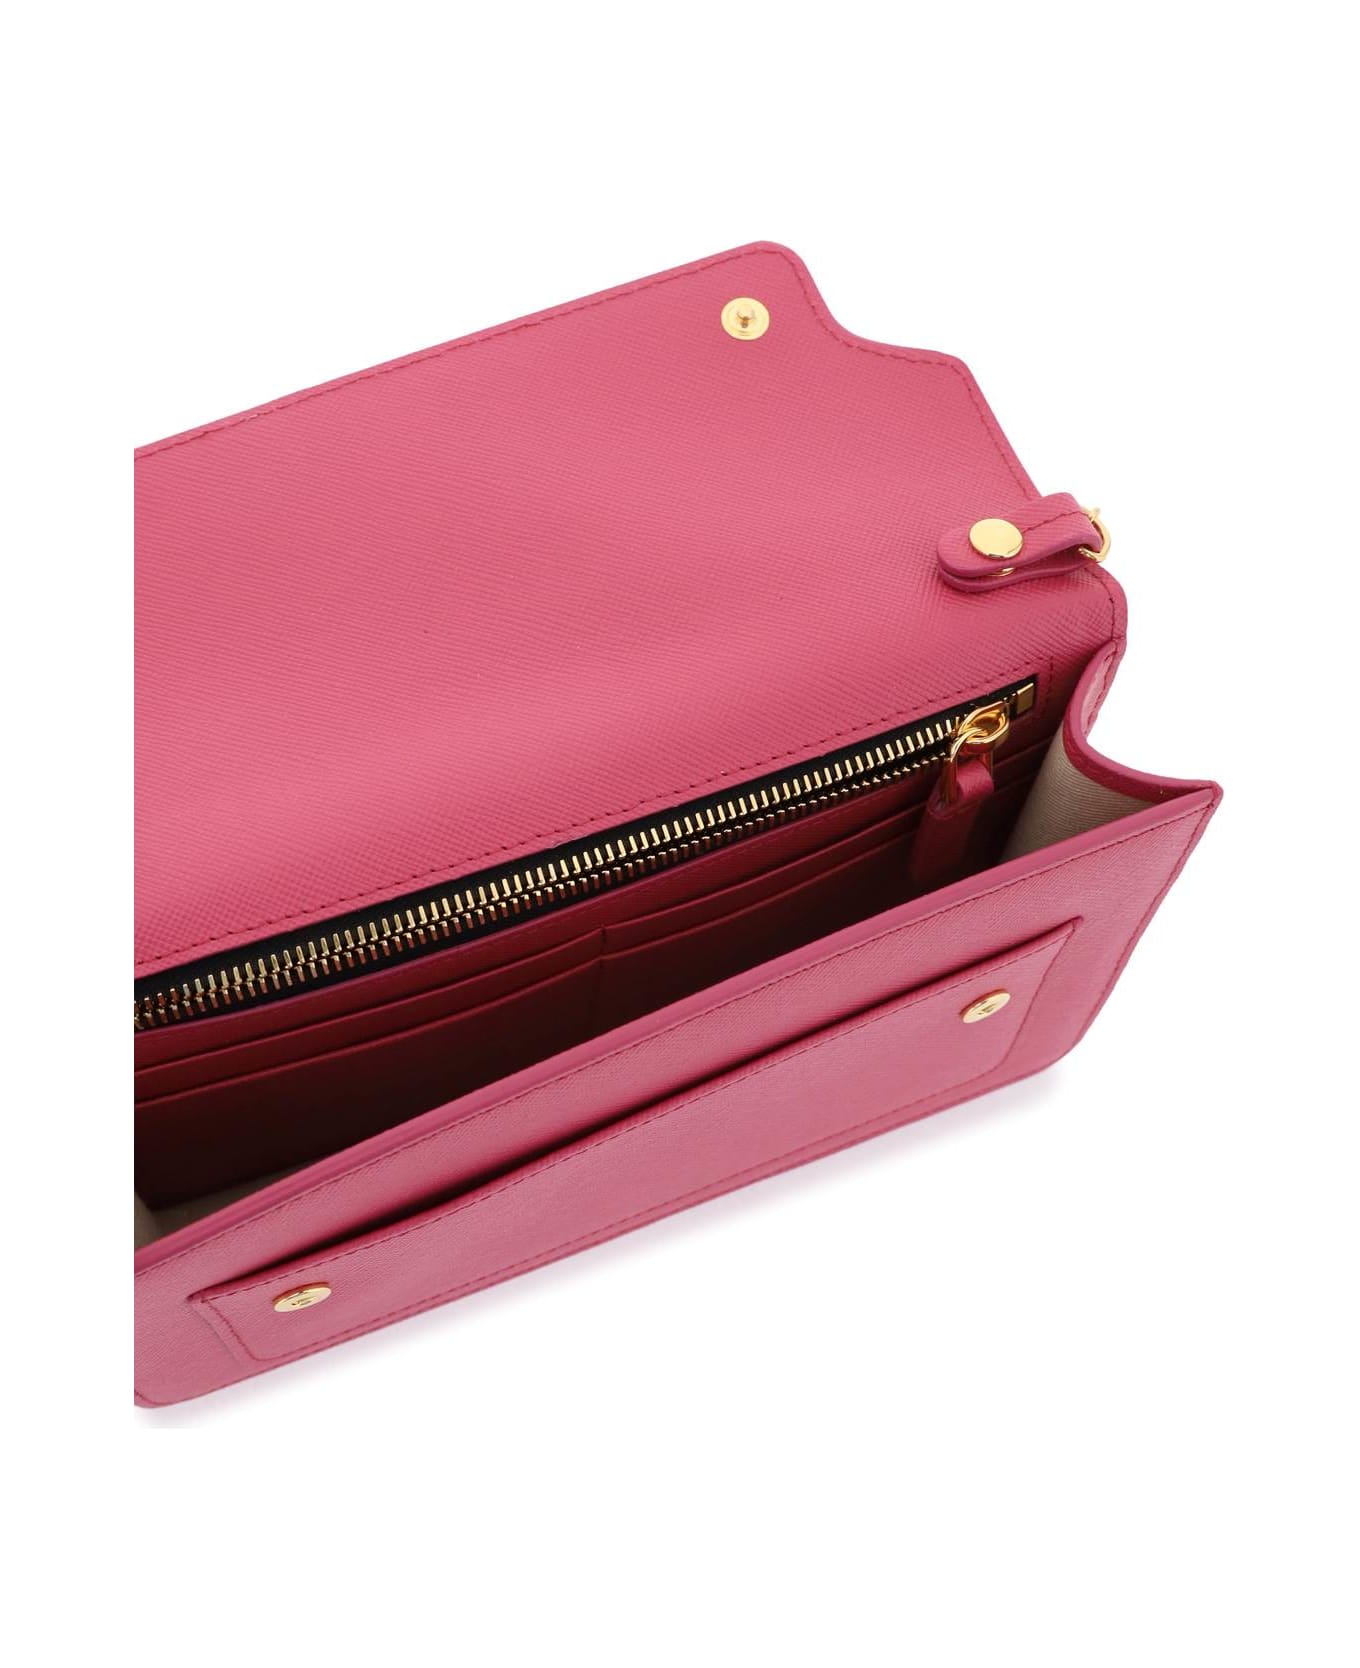 Marni Wallet Trunk Bag - LIGHT ORCHID (Pink)